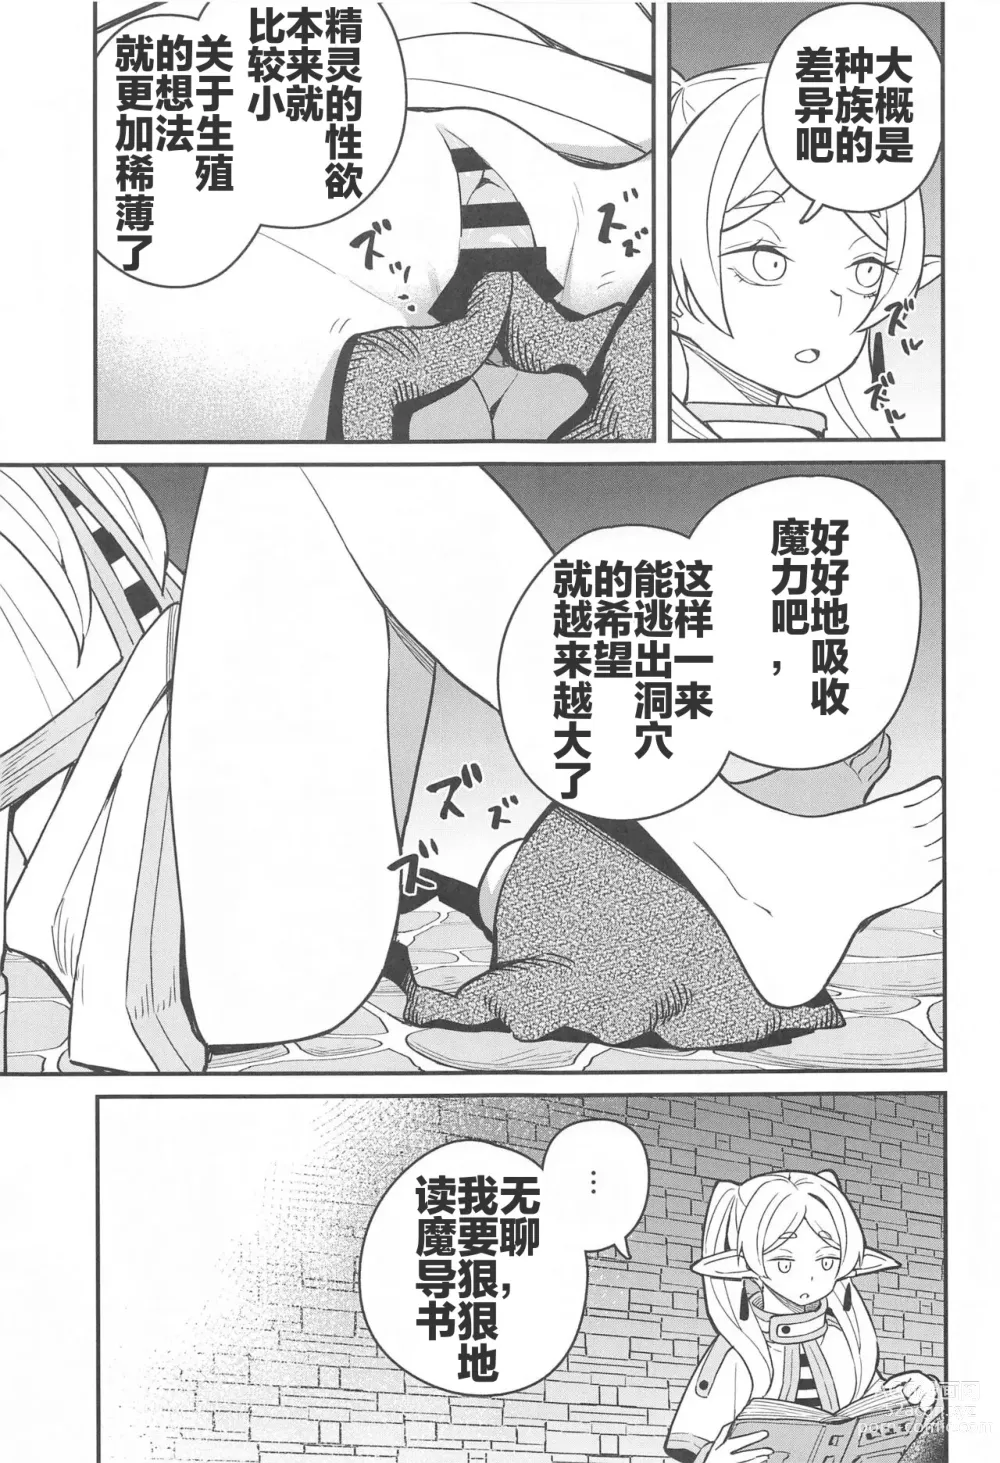 Page 11 of doujinshi 逃出深坑陷阱